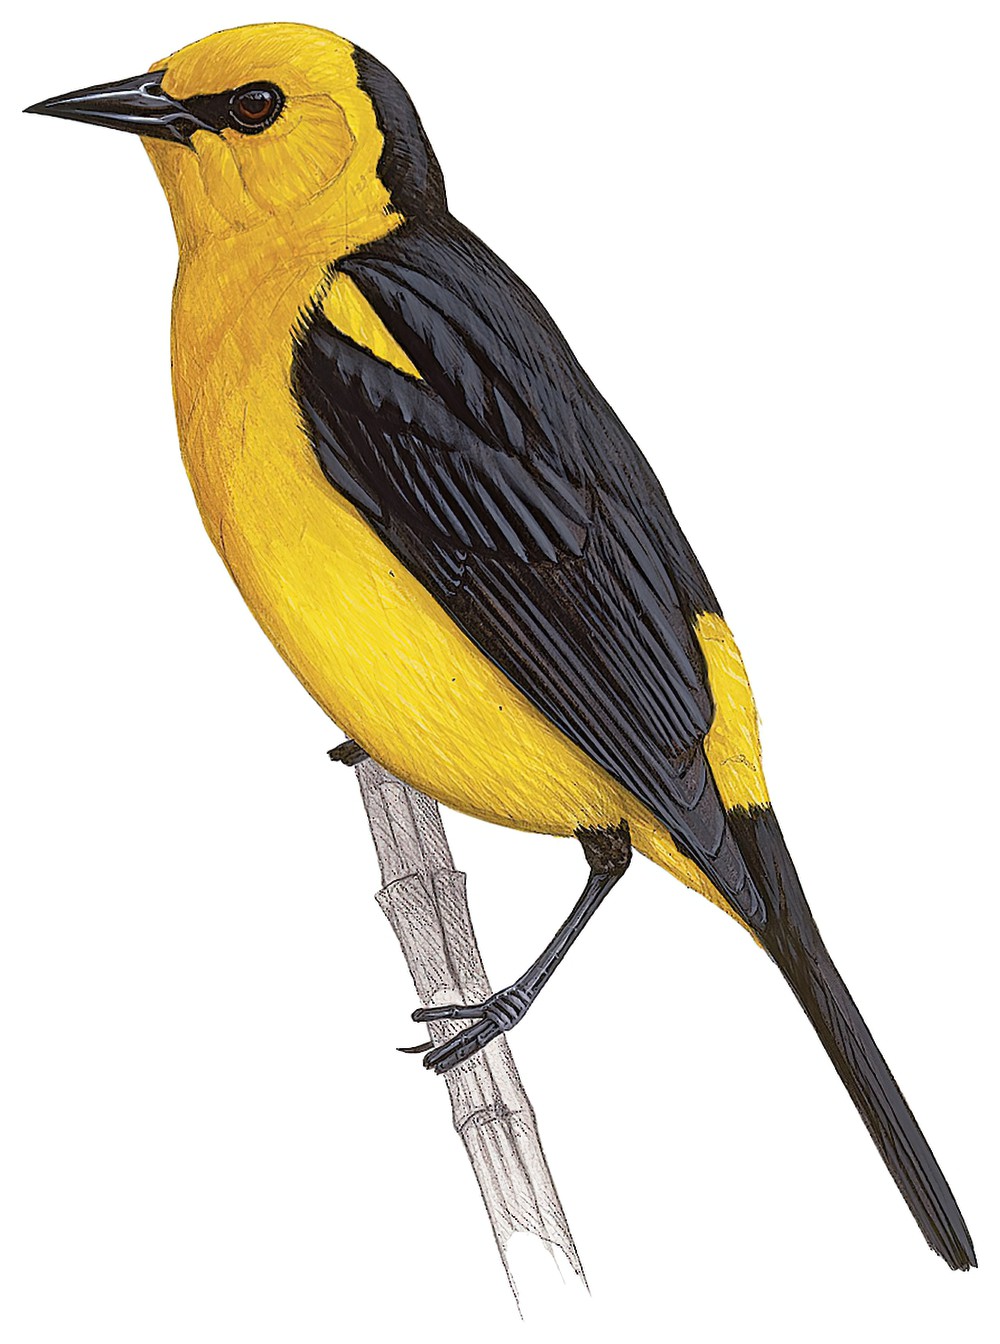 Saffron-cowled Blackbird / Xanthopsar flavus